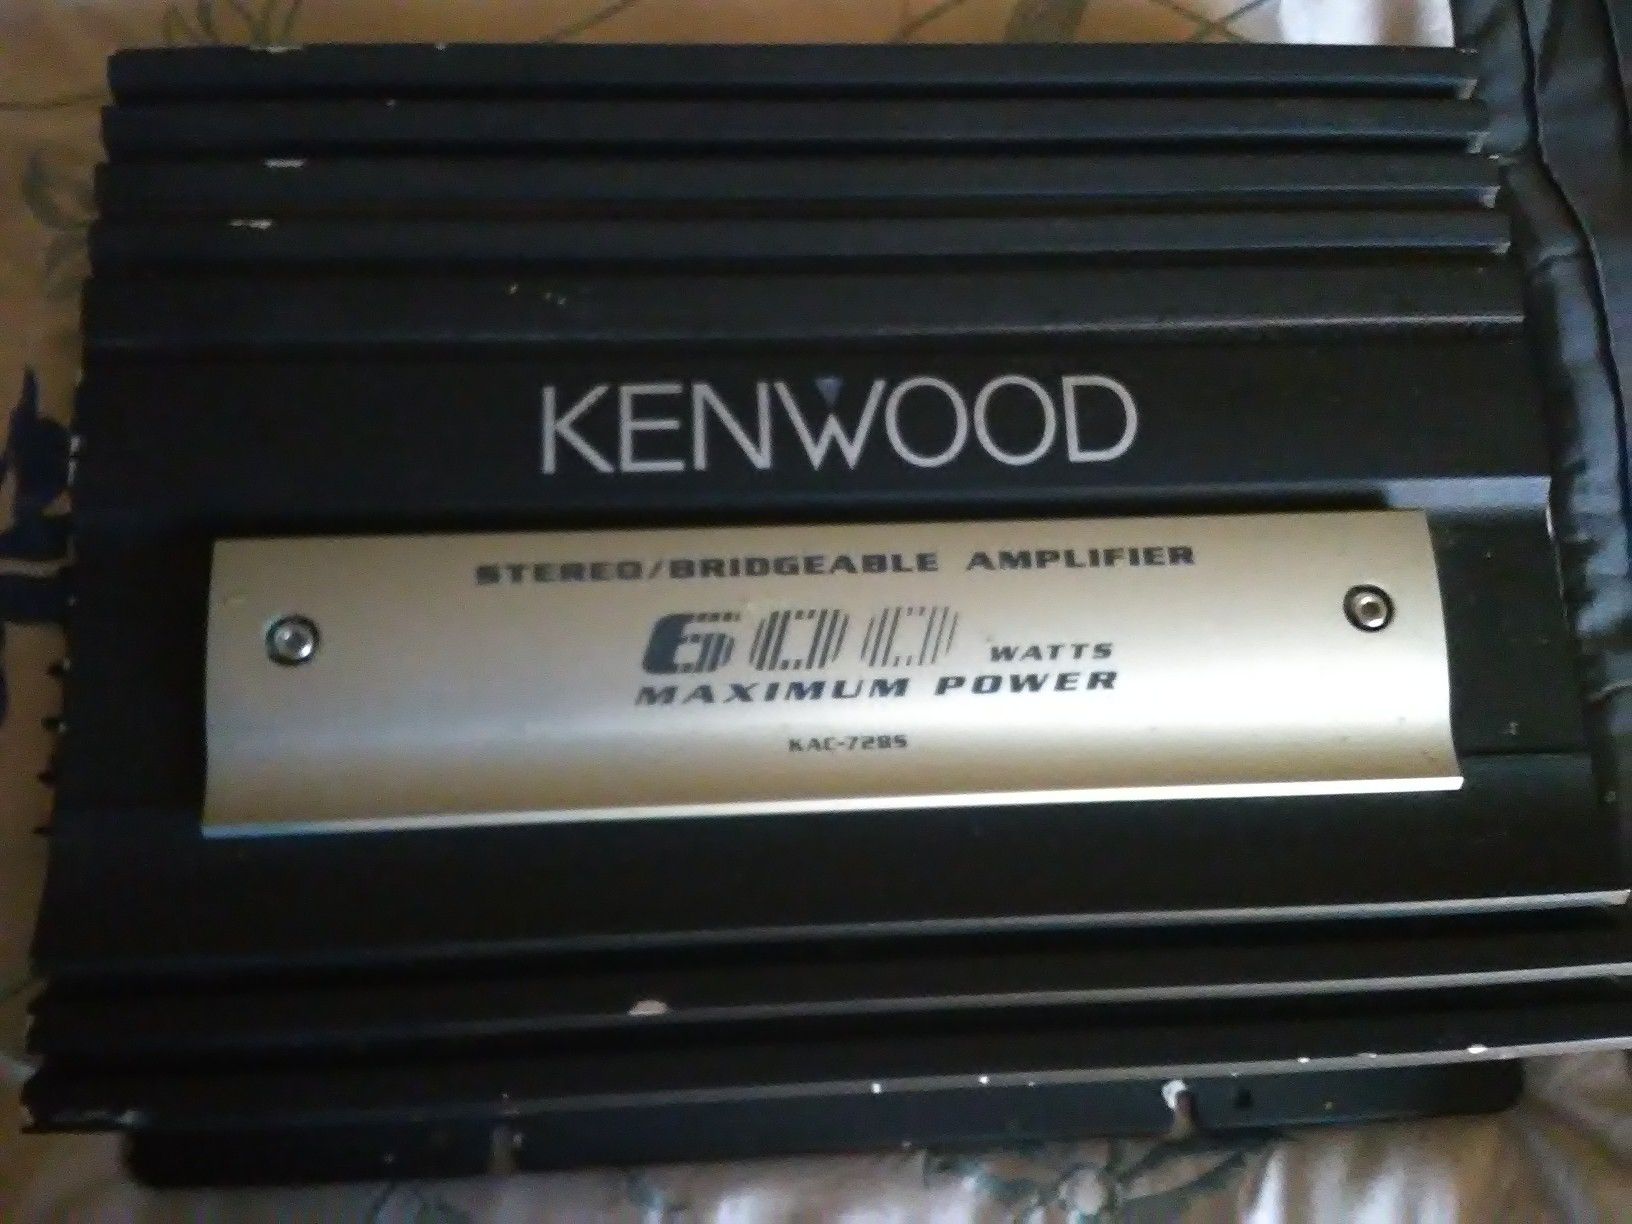 Kenwood 600 Watt amp and two JL audio pro wedge speaker boxes